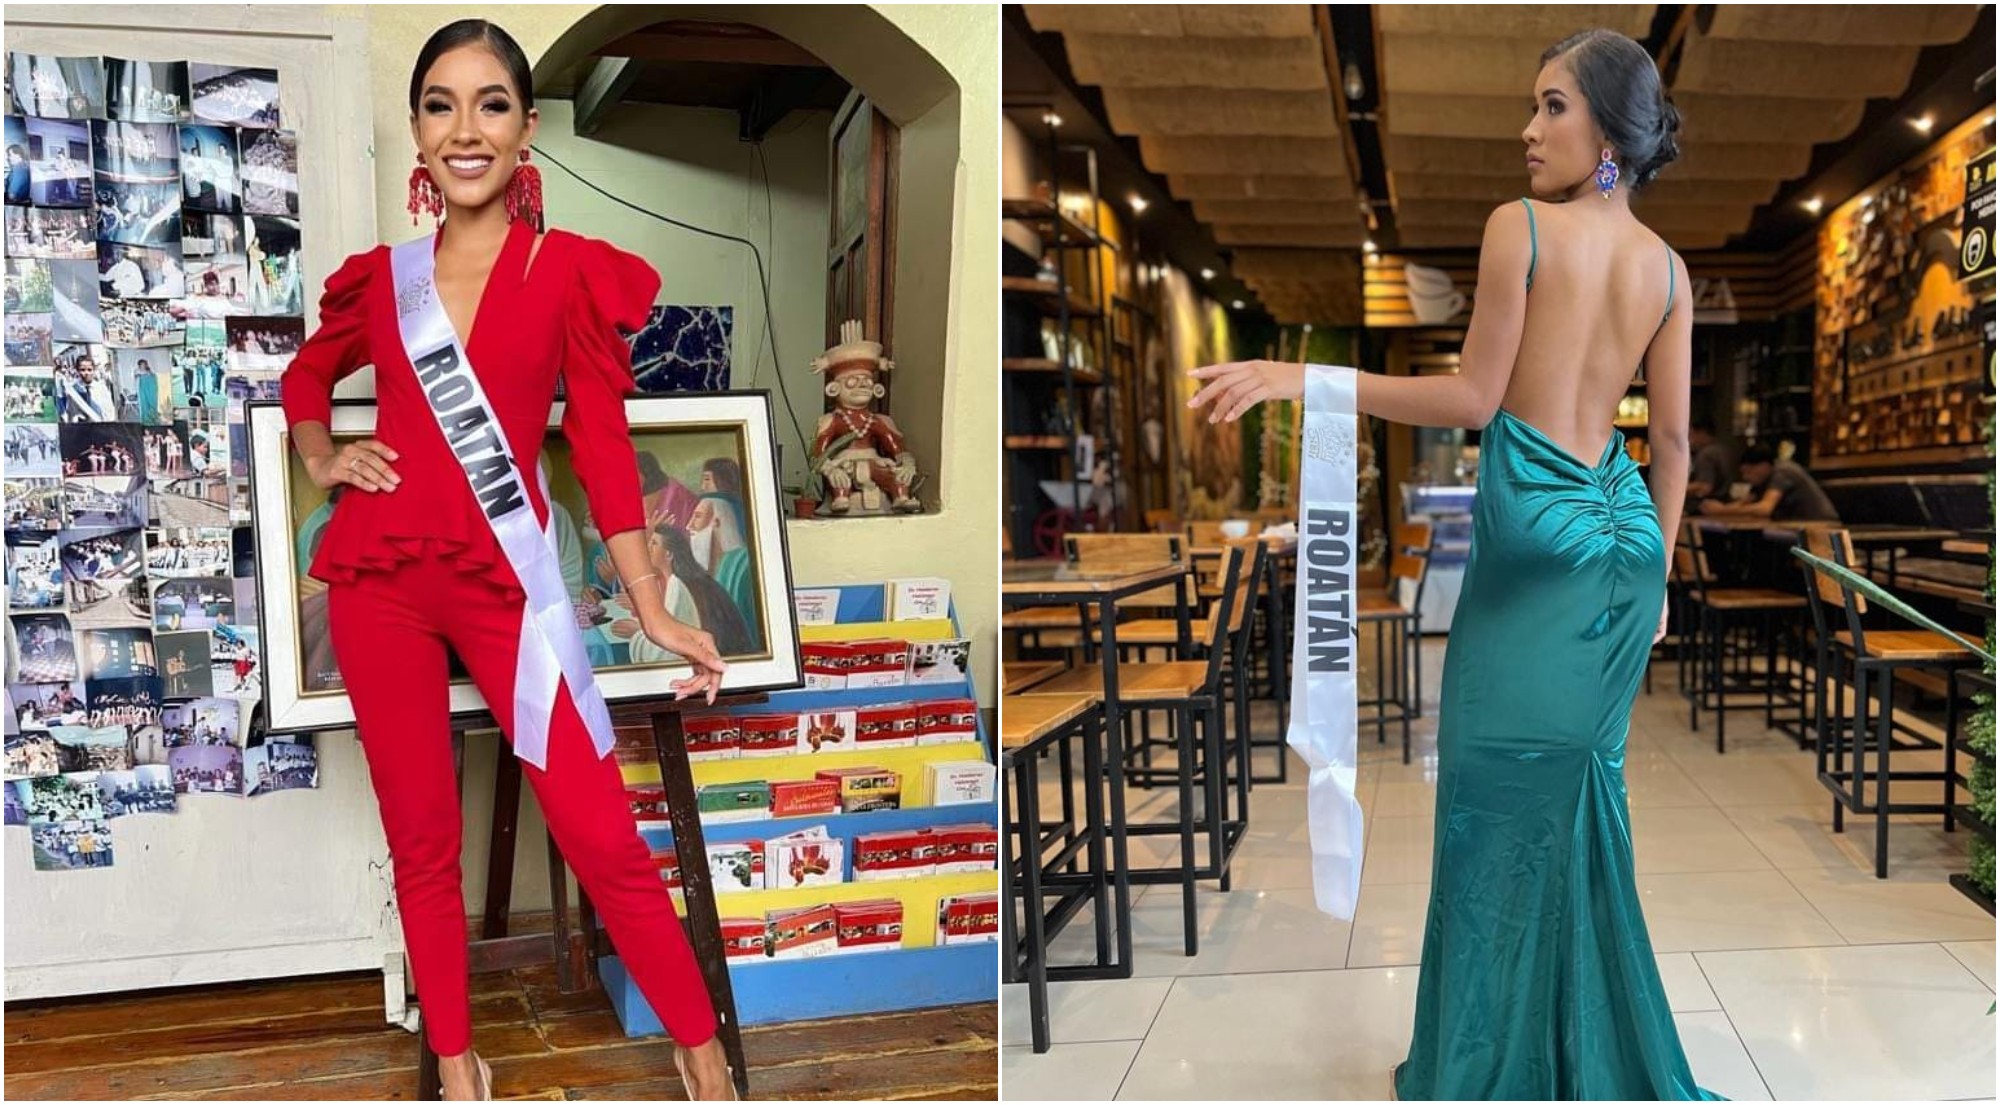 Hondureña Darling Palma, participará en Miss Continentes Unidos en Ecuador